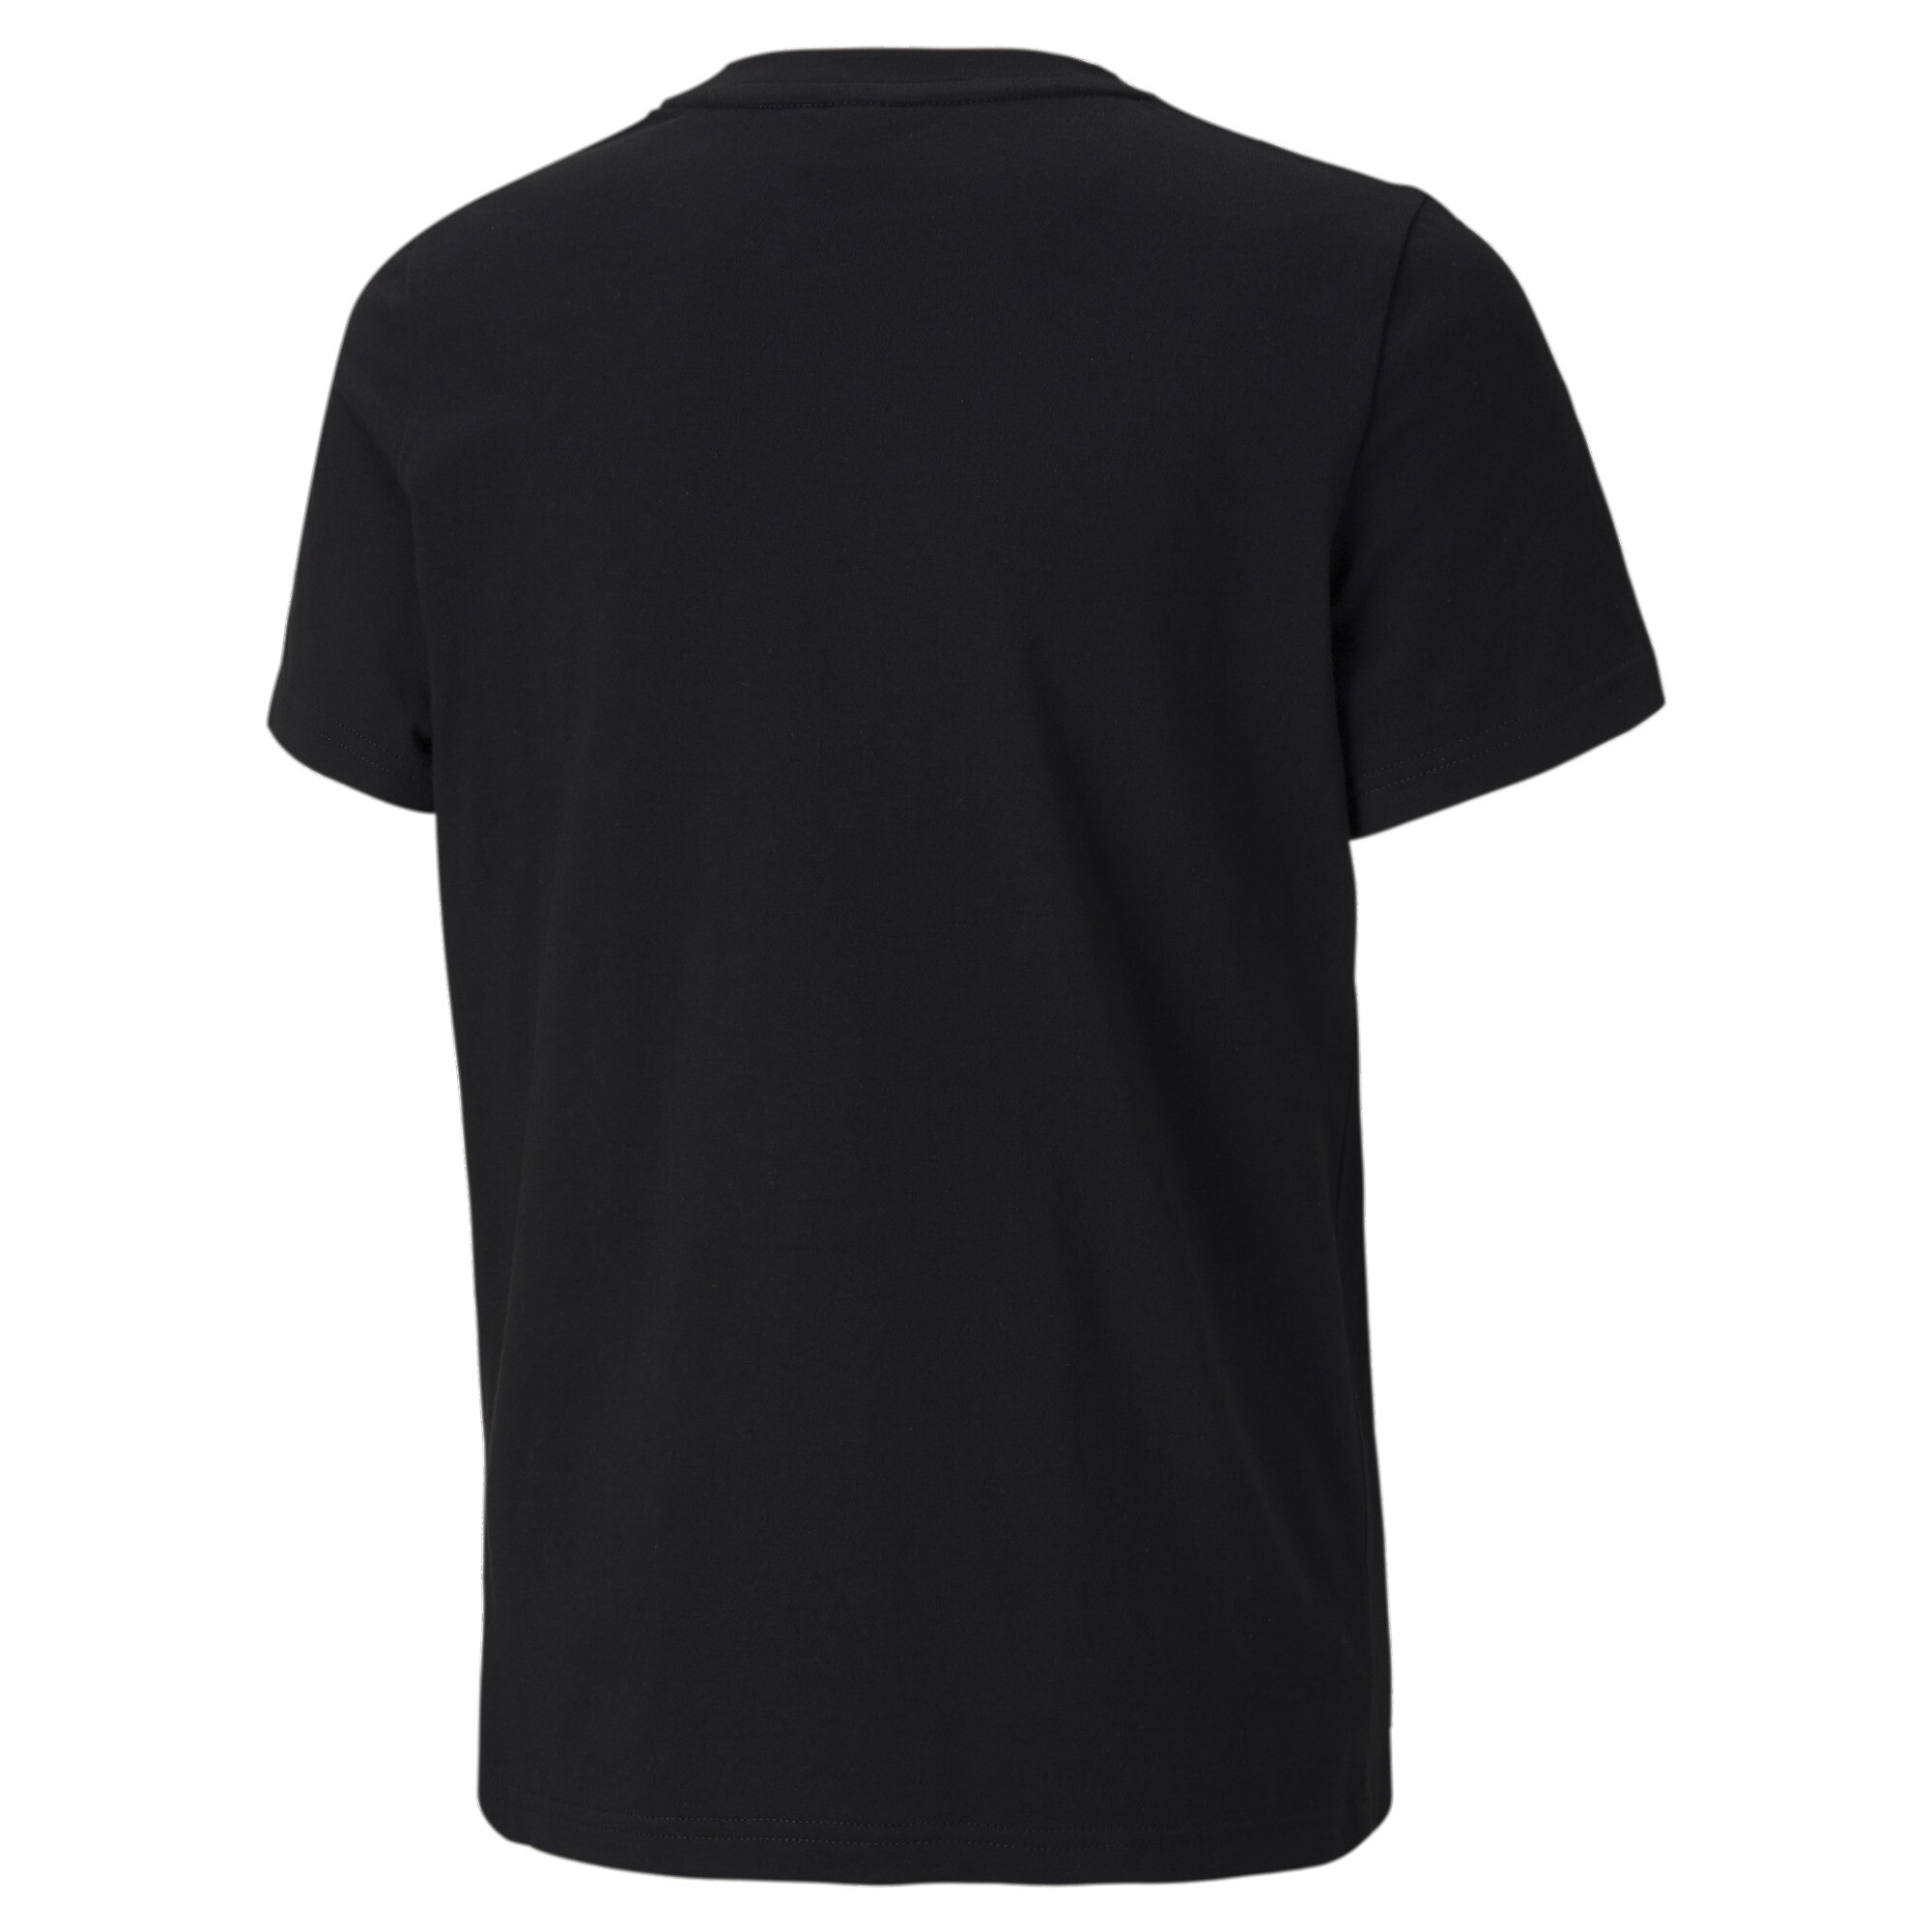 PUMA Classics B T-Shirt In Black, Size 5-6 Youth